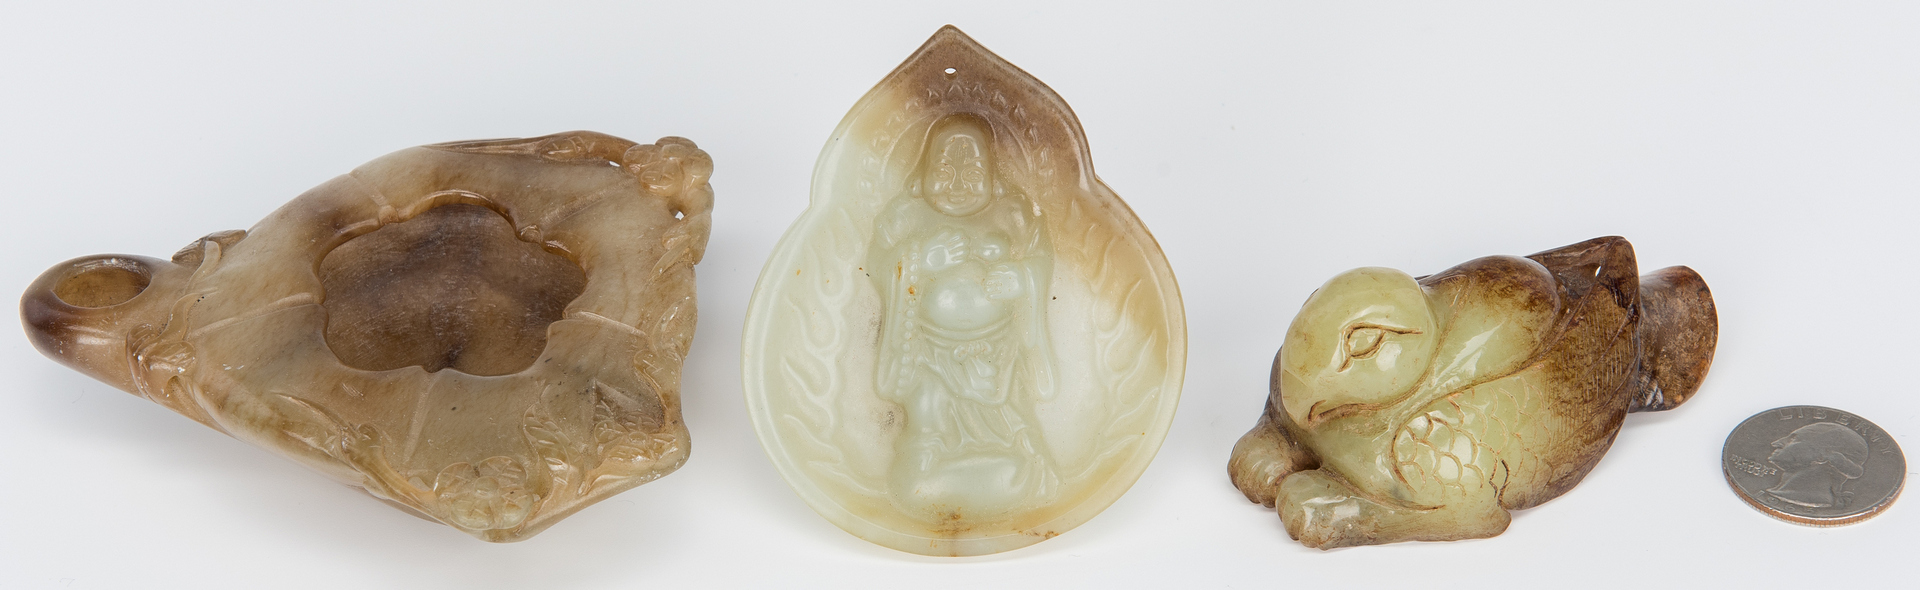 Lot 324: 3 Chinese Jade Items, incl. Buddha, Brush Pot & Bird